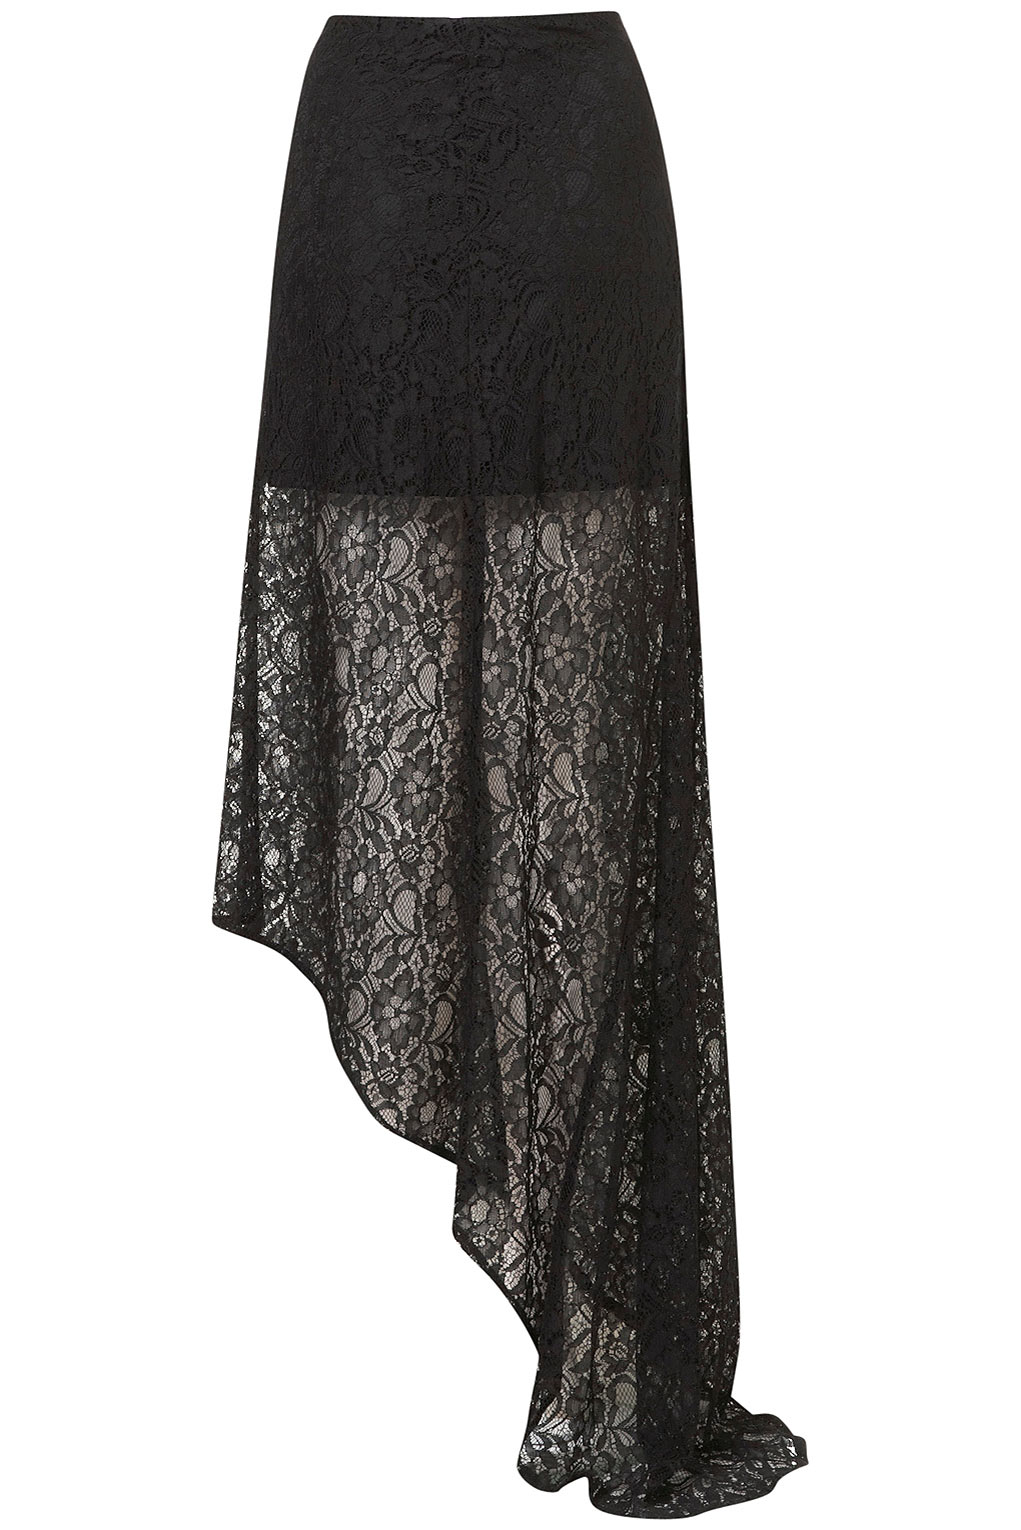 TOPSHOP Premium Lace Fishtail Skirt in Black - Lyst